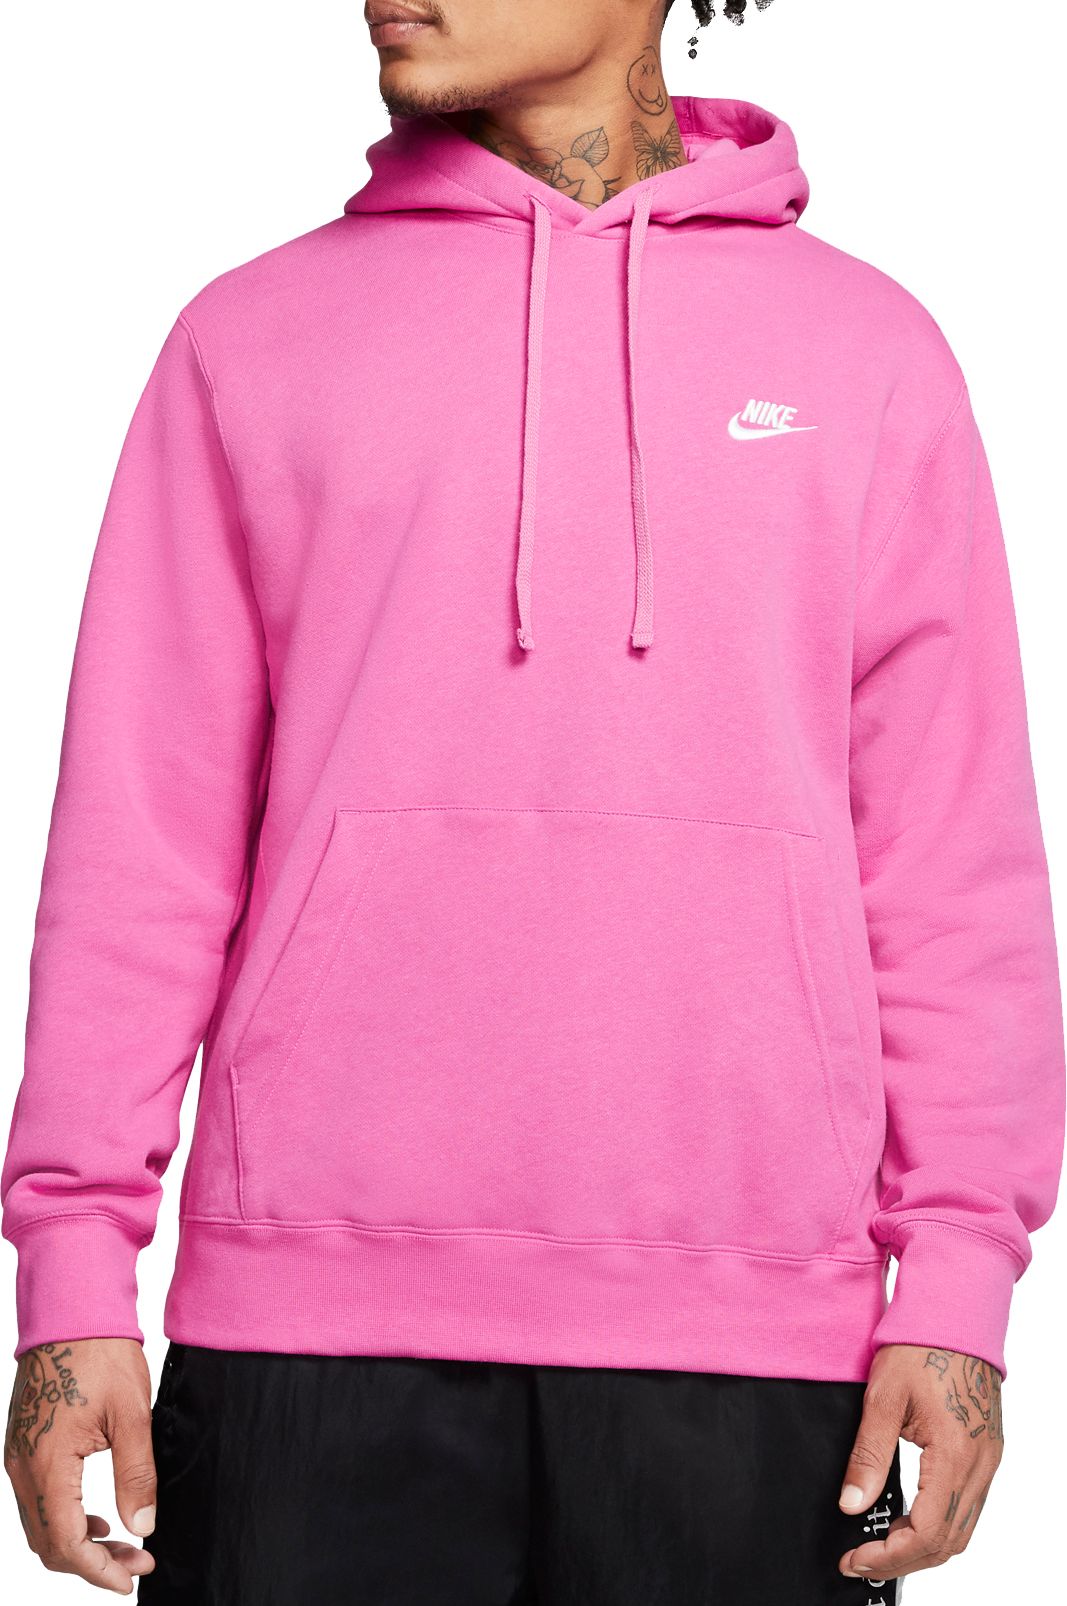 ذهبي غزو ودود pink nike fleece hoodie 